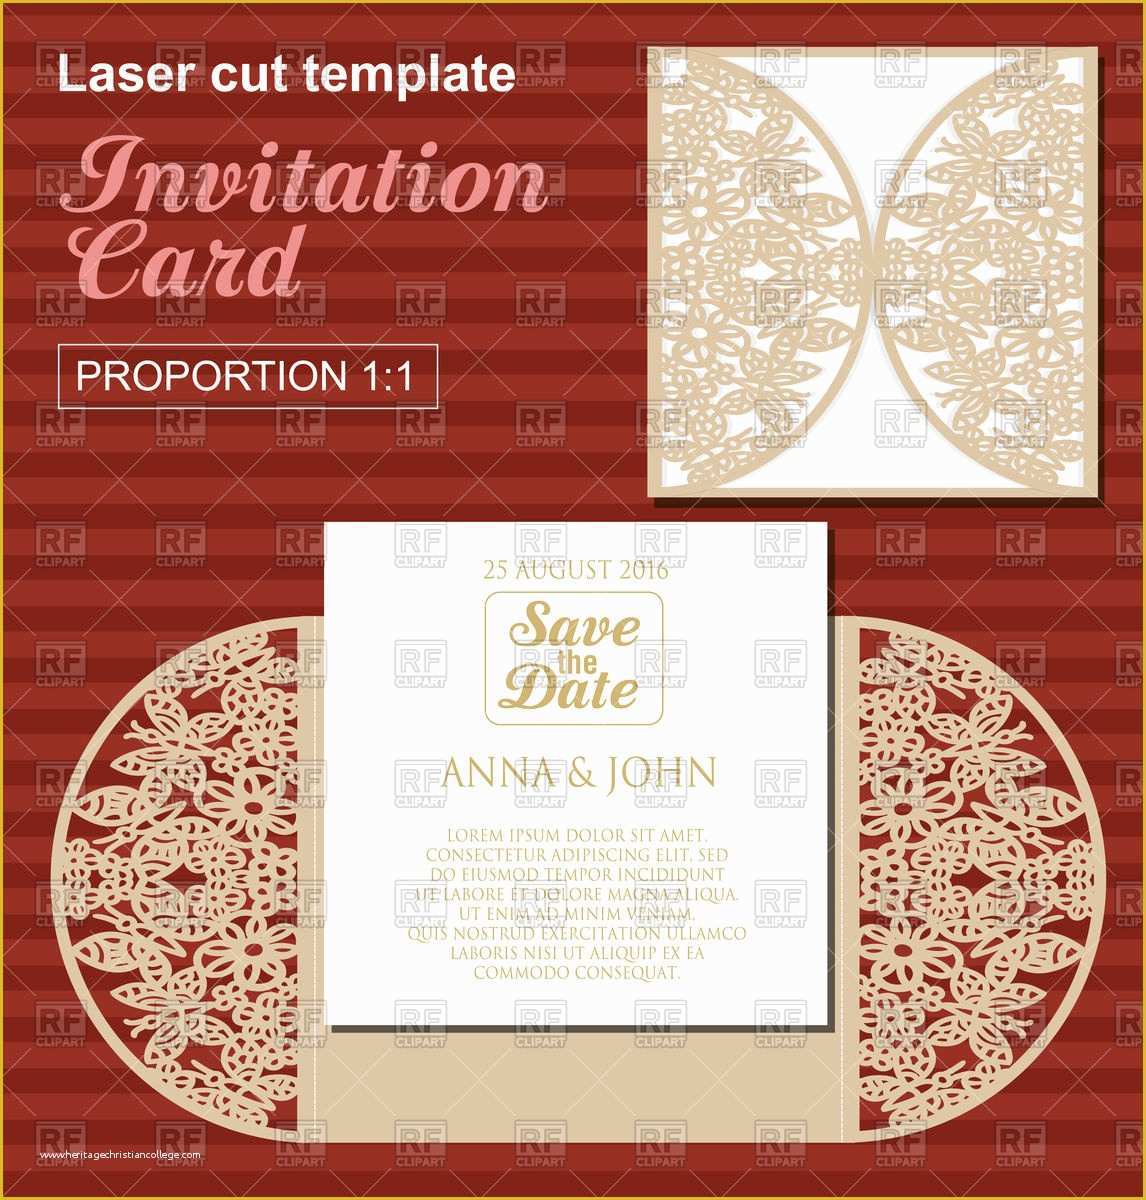 Laser Cut Wedding Invitation Templates Free Of Laser Cut Wedding Invitation Templates Yourweek